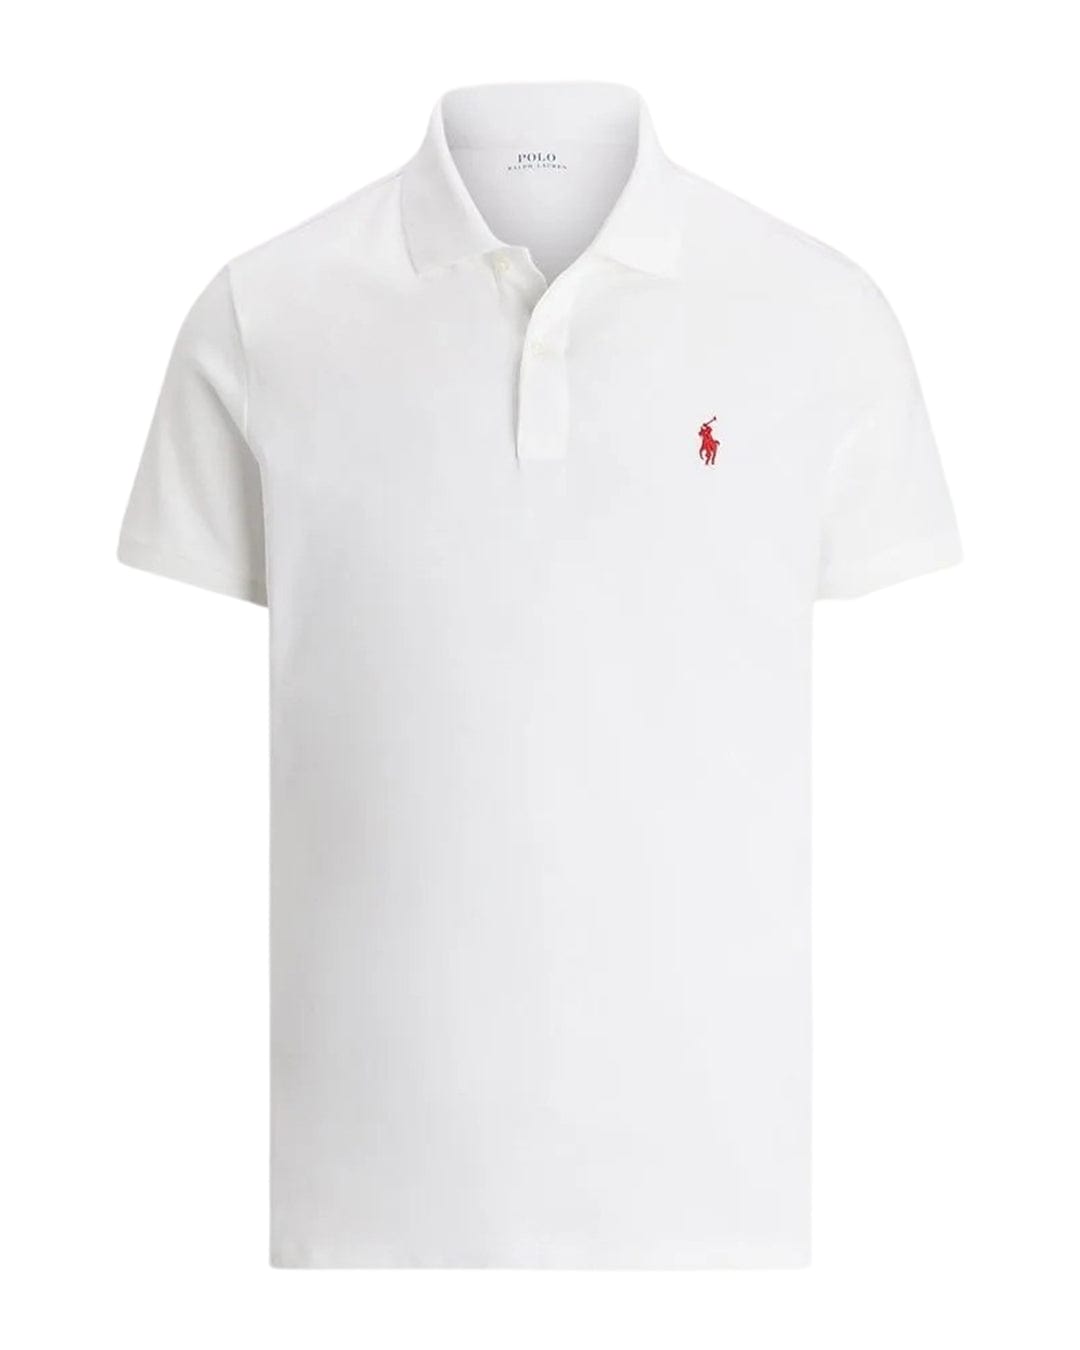 Polo Ralph Lauren Polo Shirts Polo Ralph Lauren Tailored Fit White Pique Polo Shirt